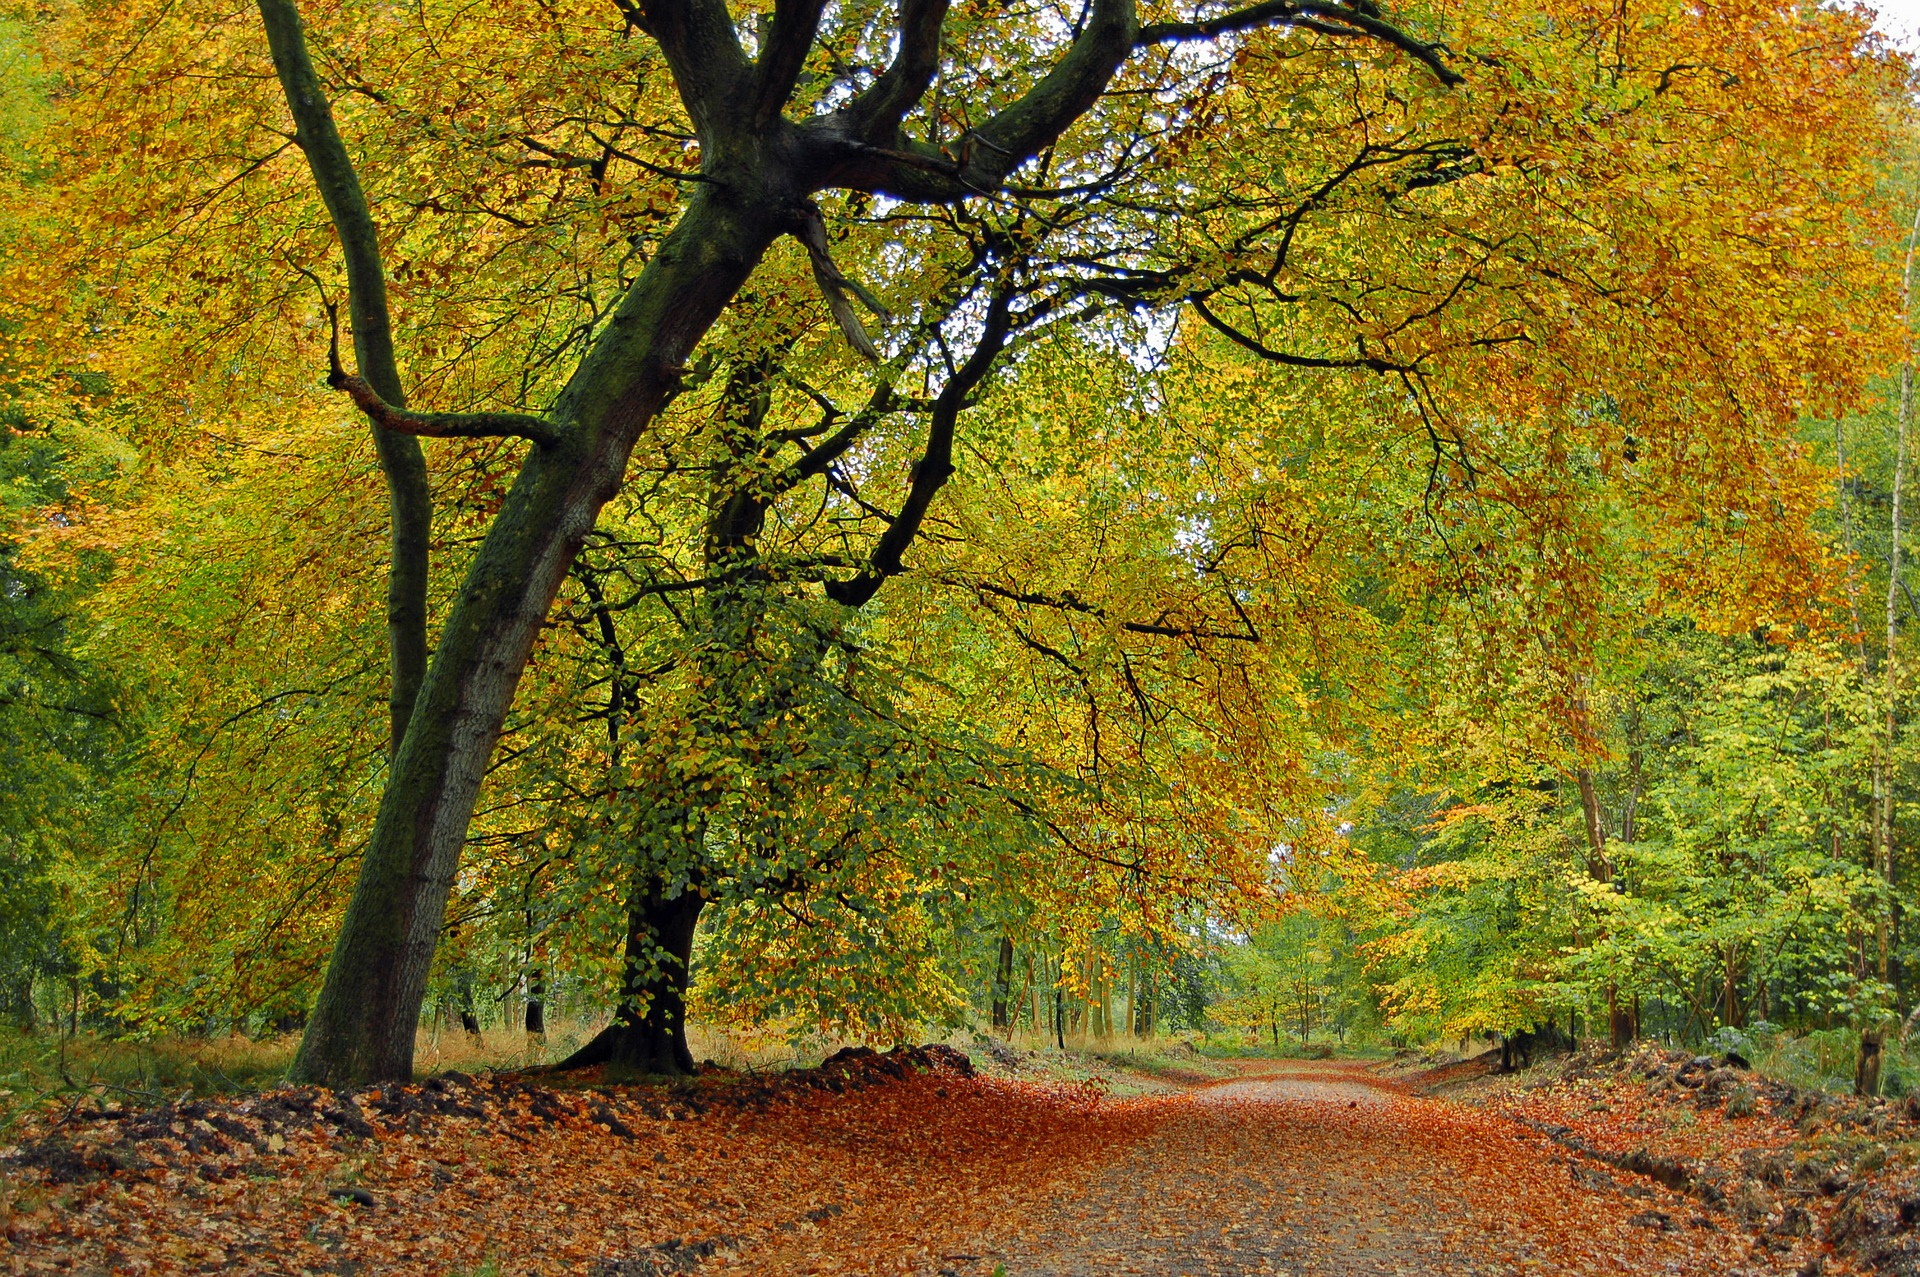 Woodland in Savernake Forest for dog friendly walks in Wiltshire, Malborough nr Swindon